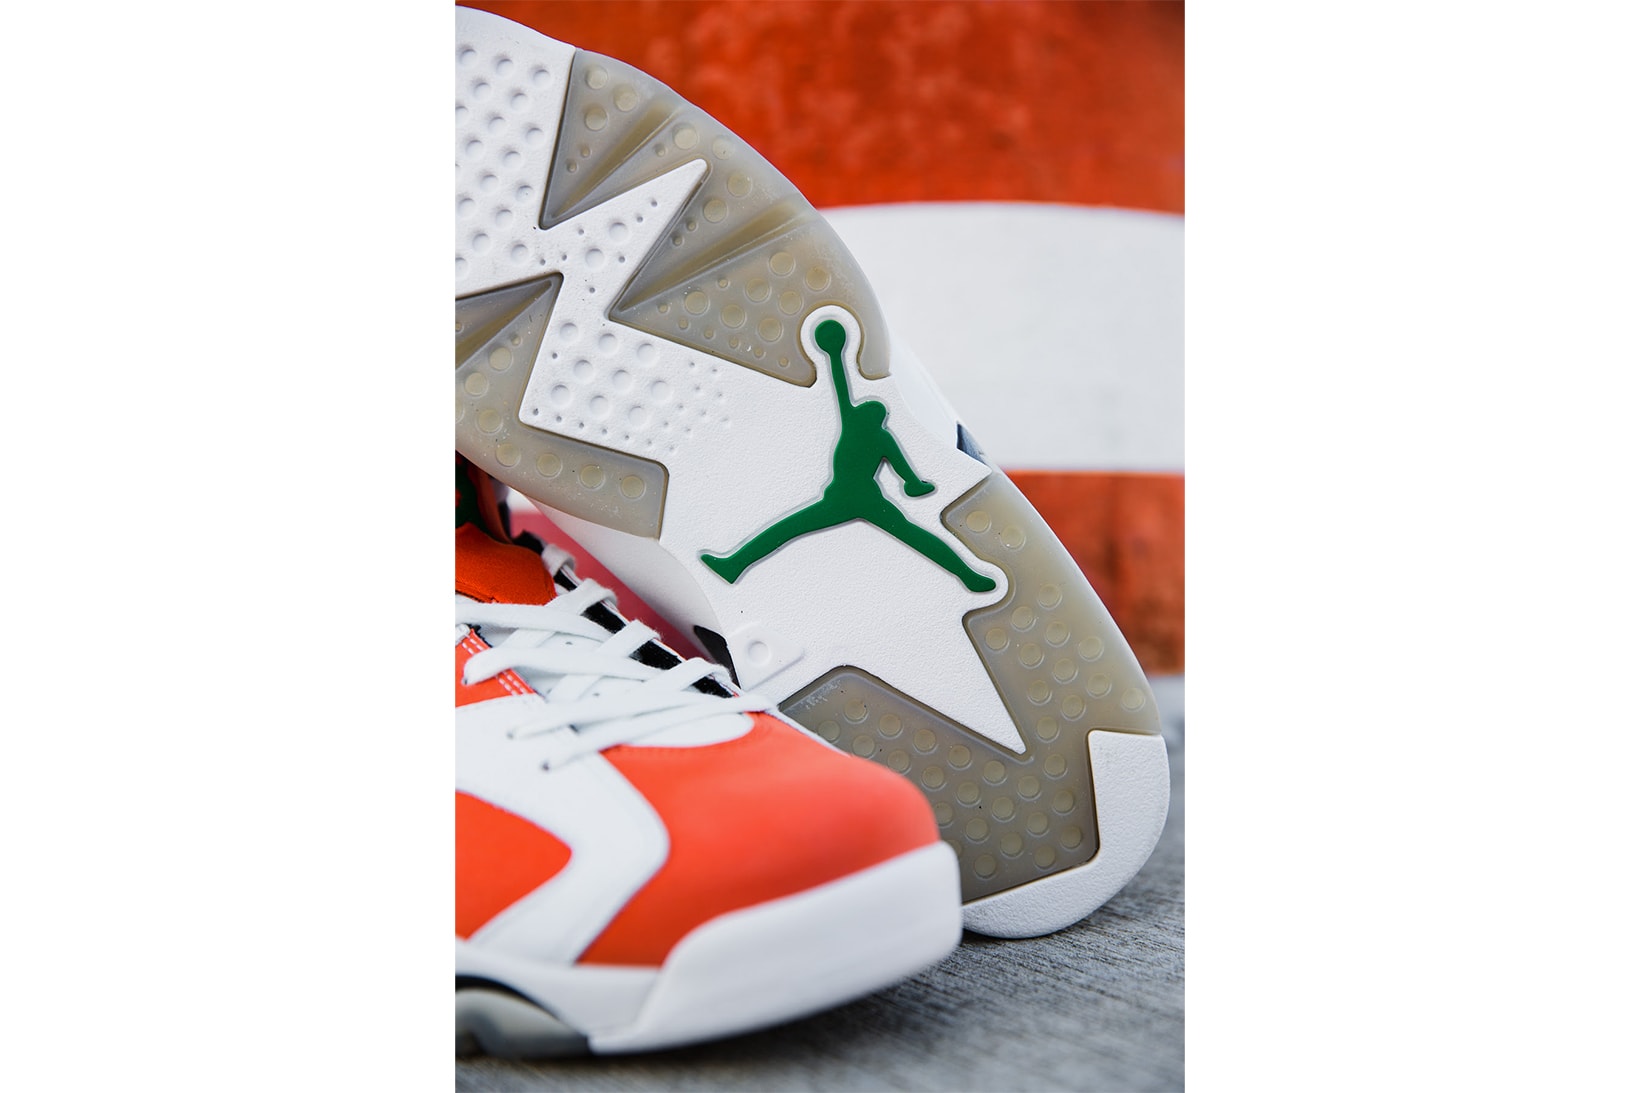 Gatorade Air Jordan 6 Like Mike Closer Look 2017 December 16 Release Date Info Sneakers Shoes Footwear Overkill Berlin